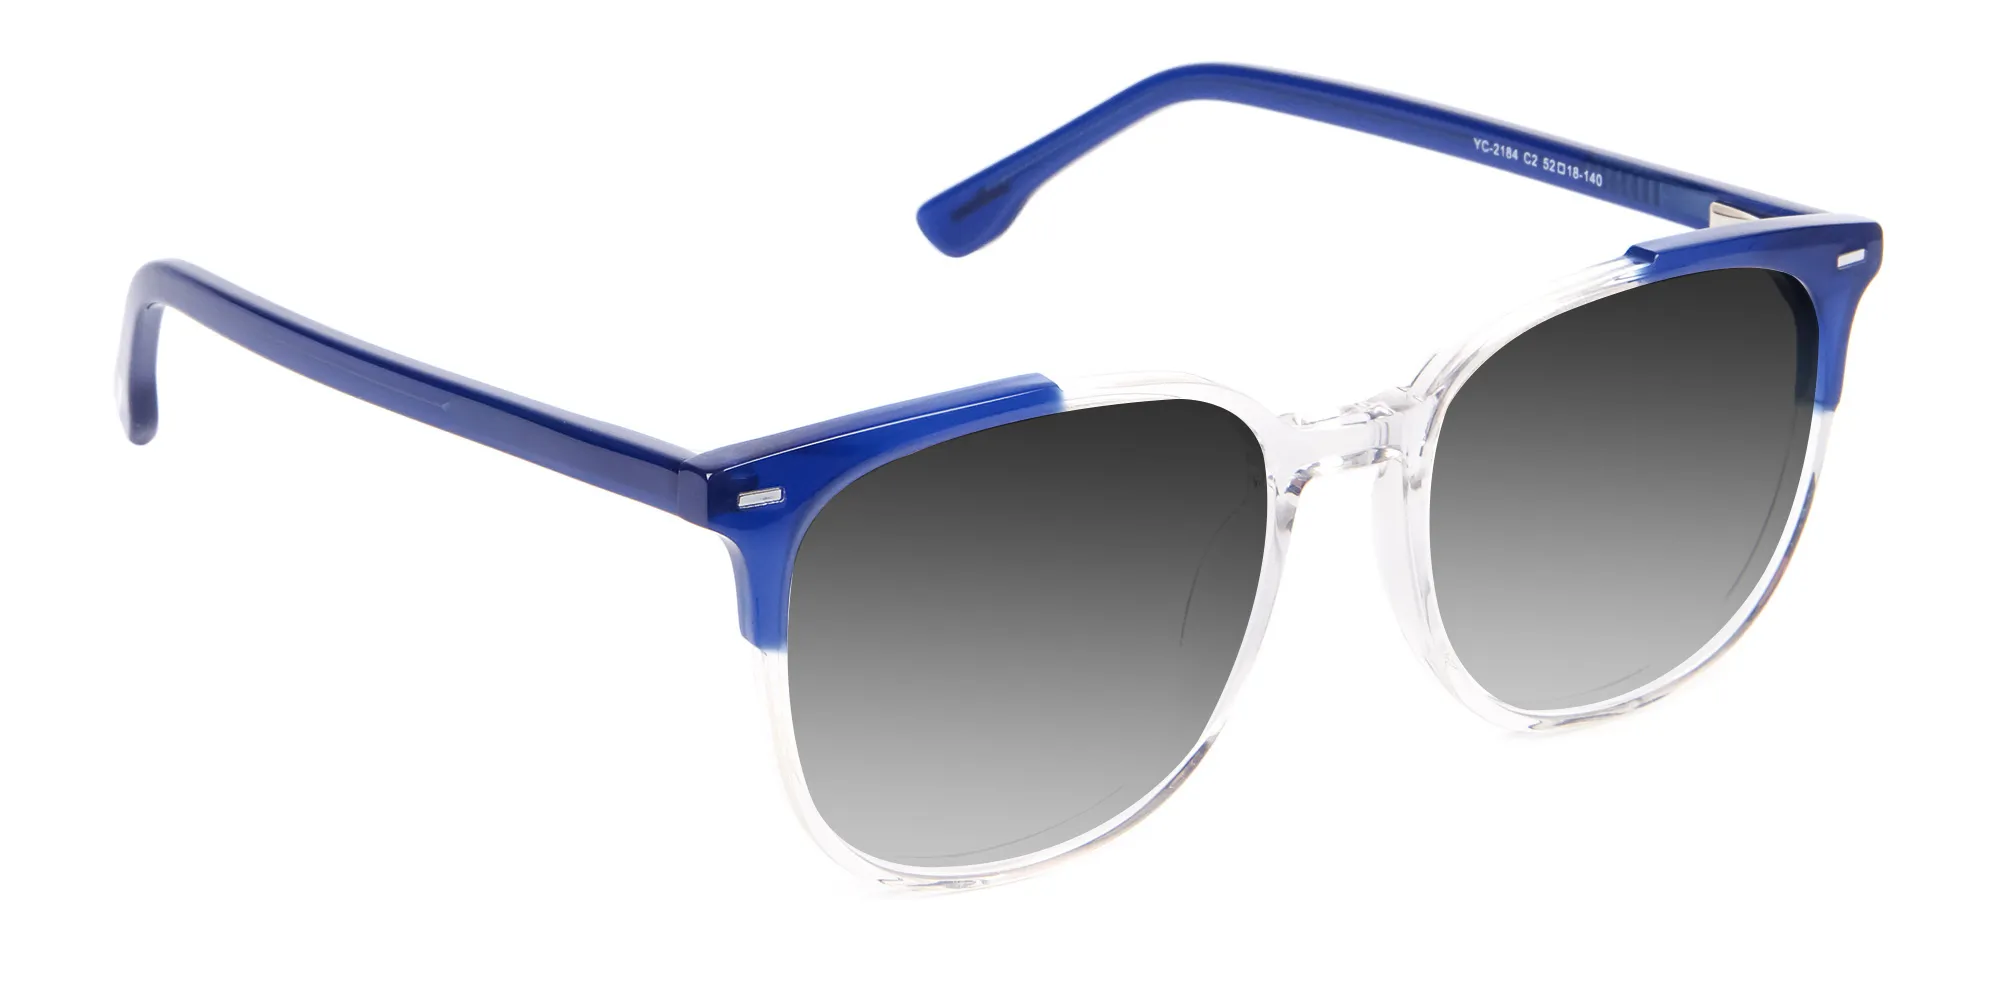 Square Grey Tint Sunglasses Online-2